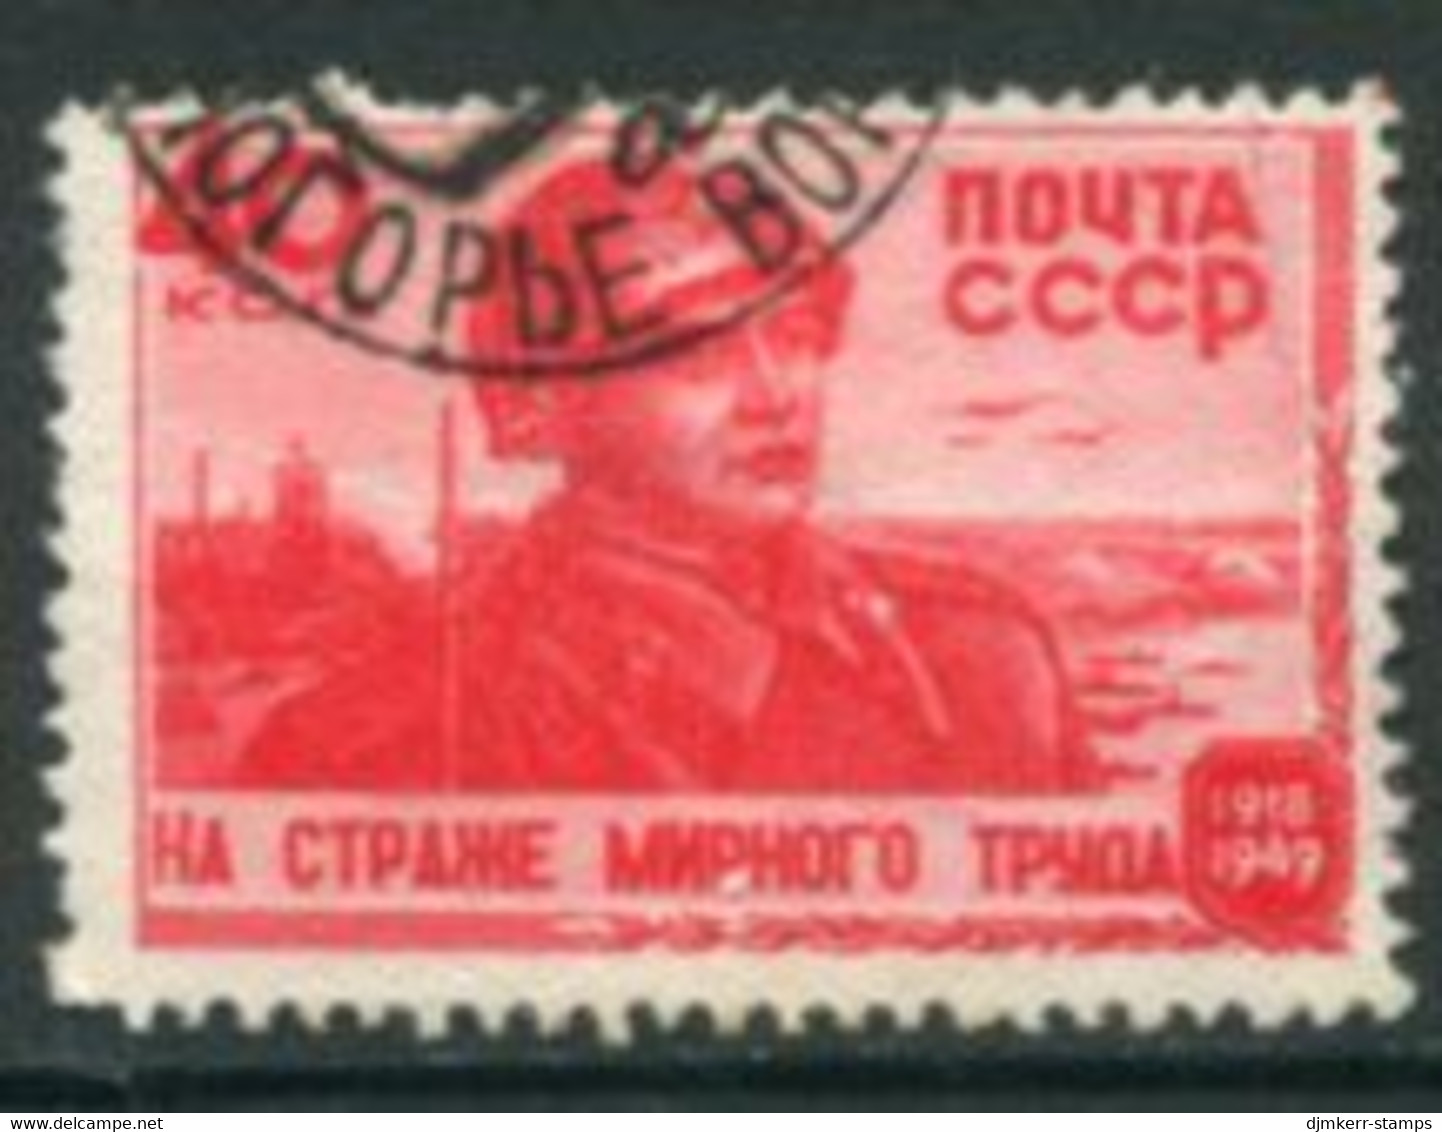 SOVIET UNION 1949 Soviet Army Anniversary Used.  Michel 1327 - Oblitérés